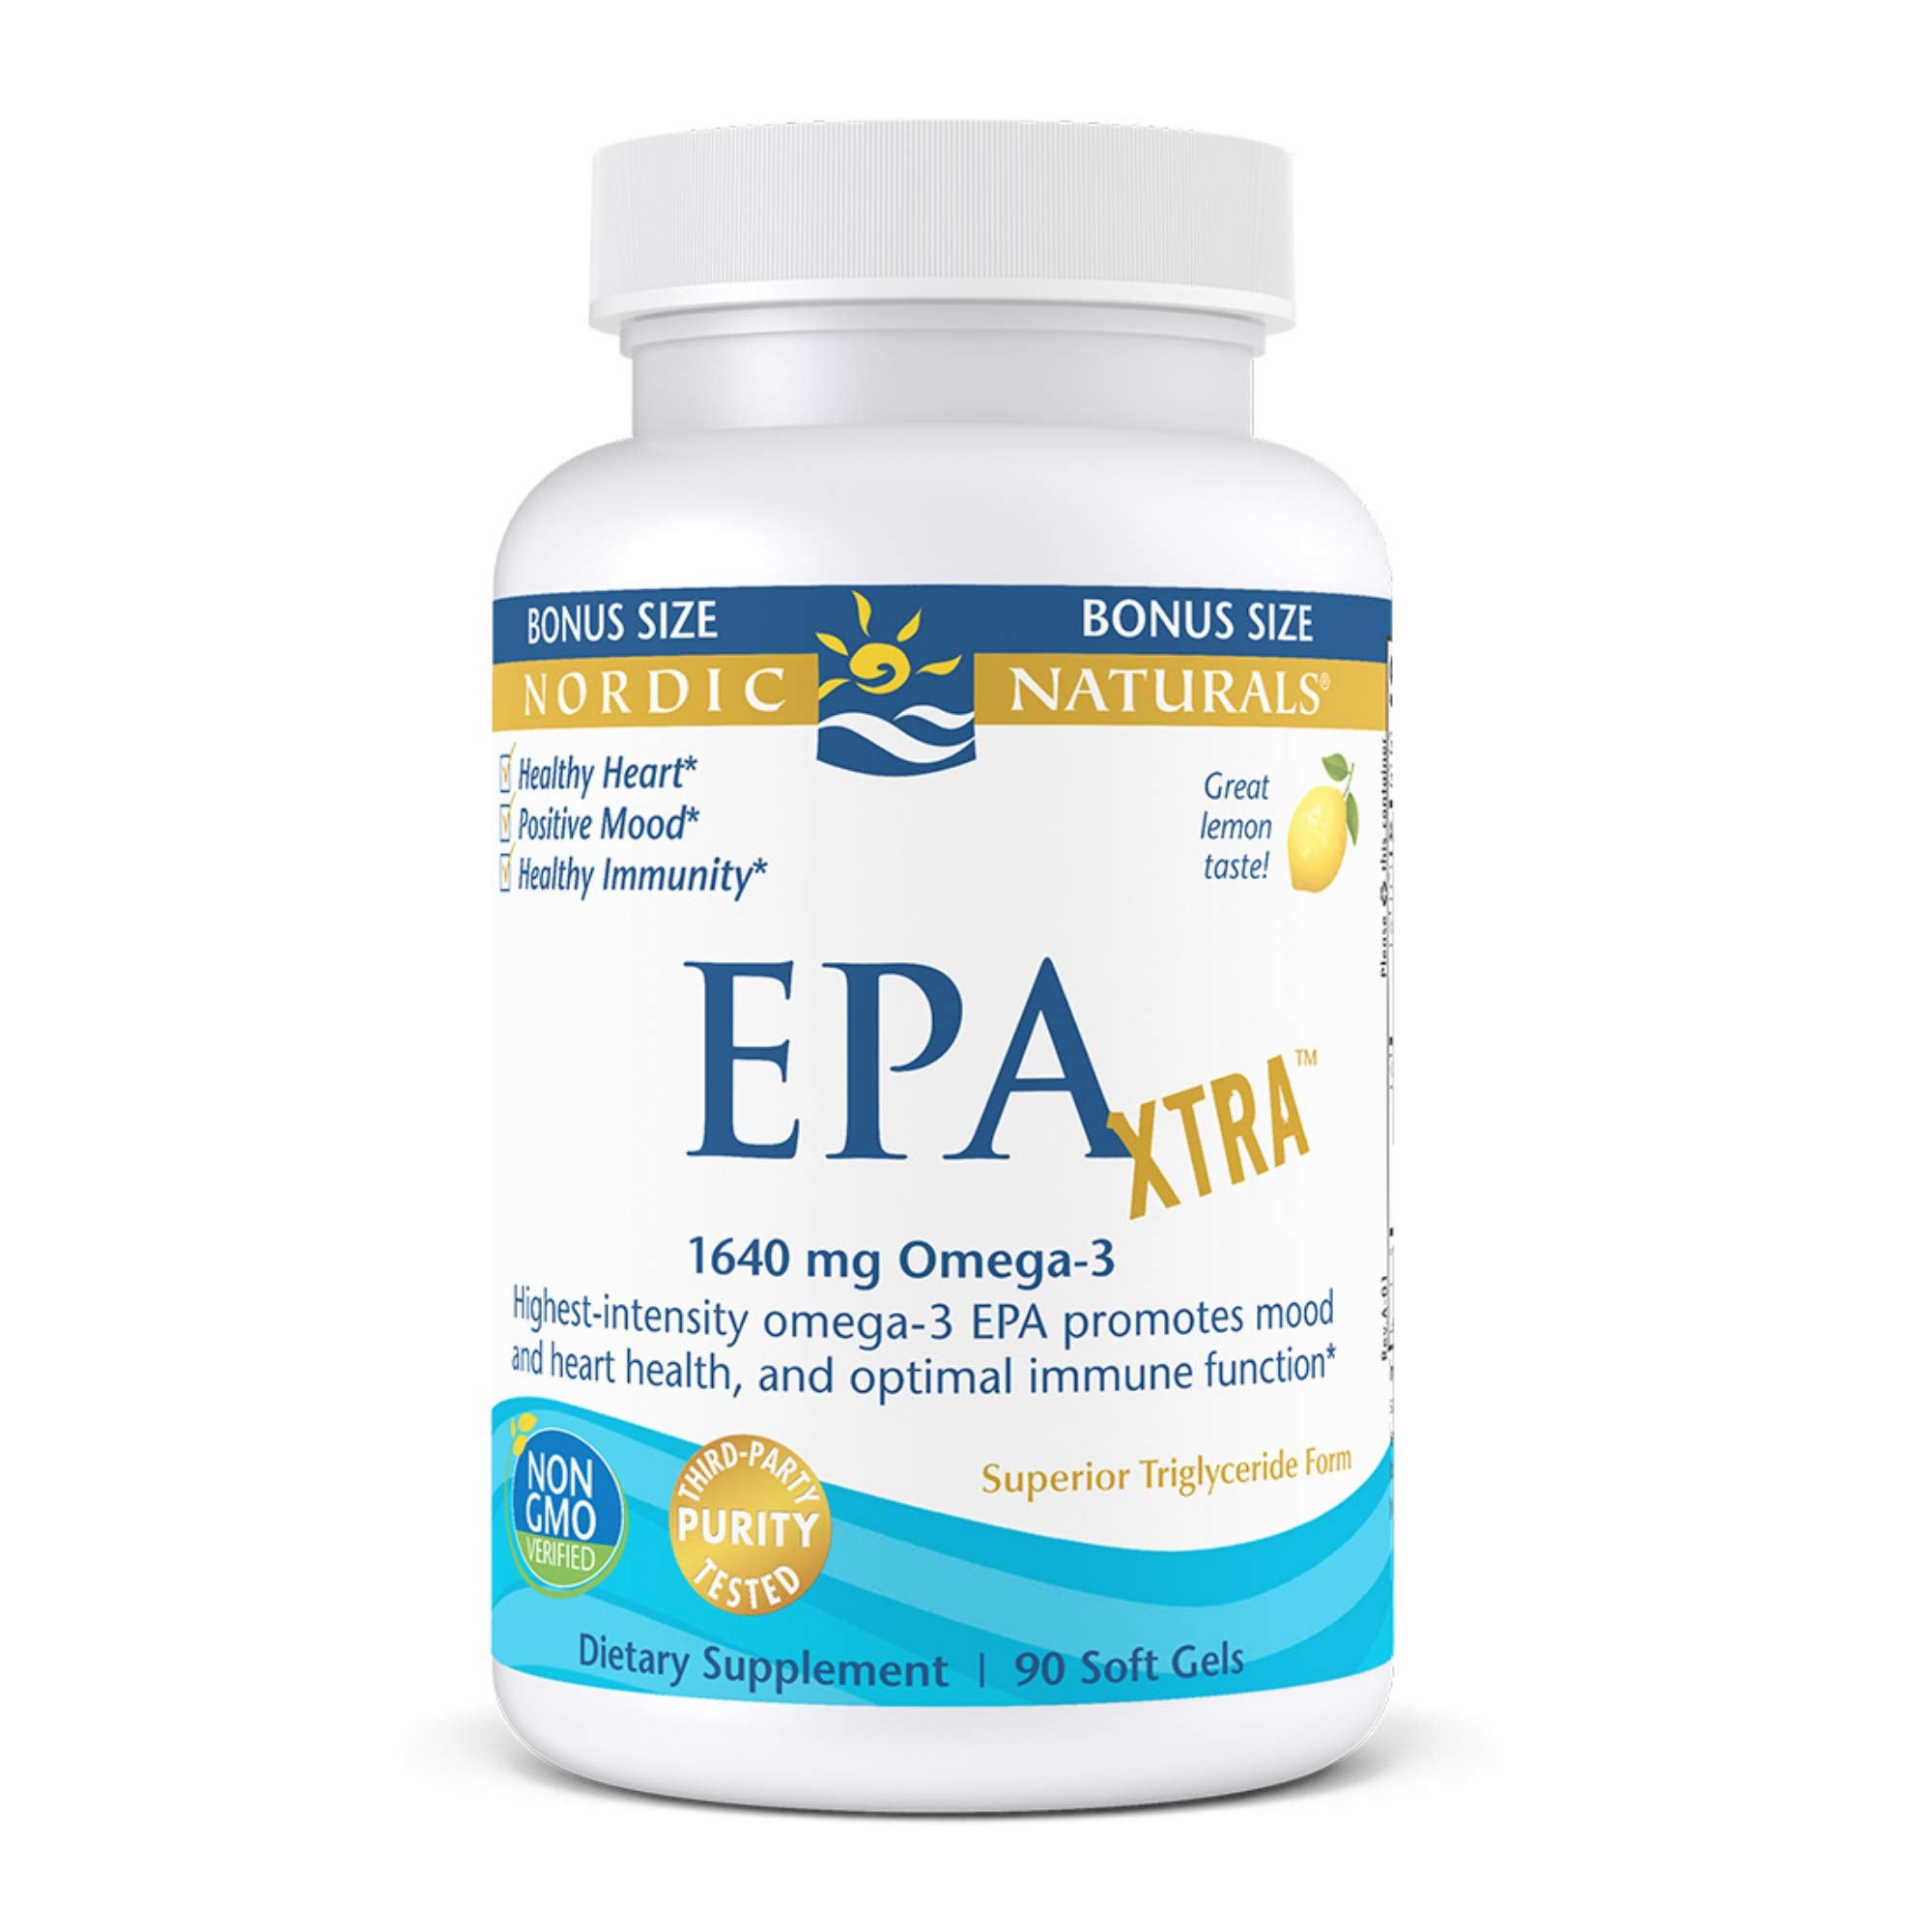 Nordic Naturals EPA Xtra, Lemon - 90 Soft Gels - 1640 mg Omega-3 - High-Intensity EPA Formula for Positive Mood, Heart Health & Healthy Immunity - Non-GMO - 45 Servings